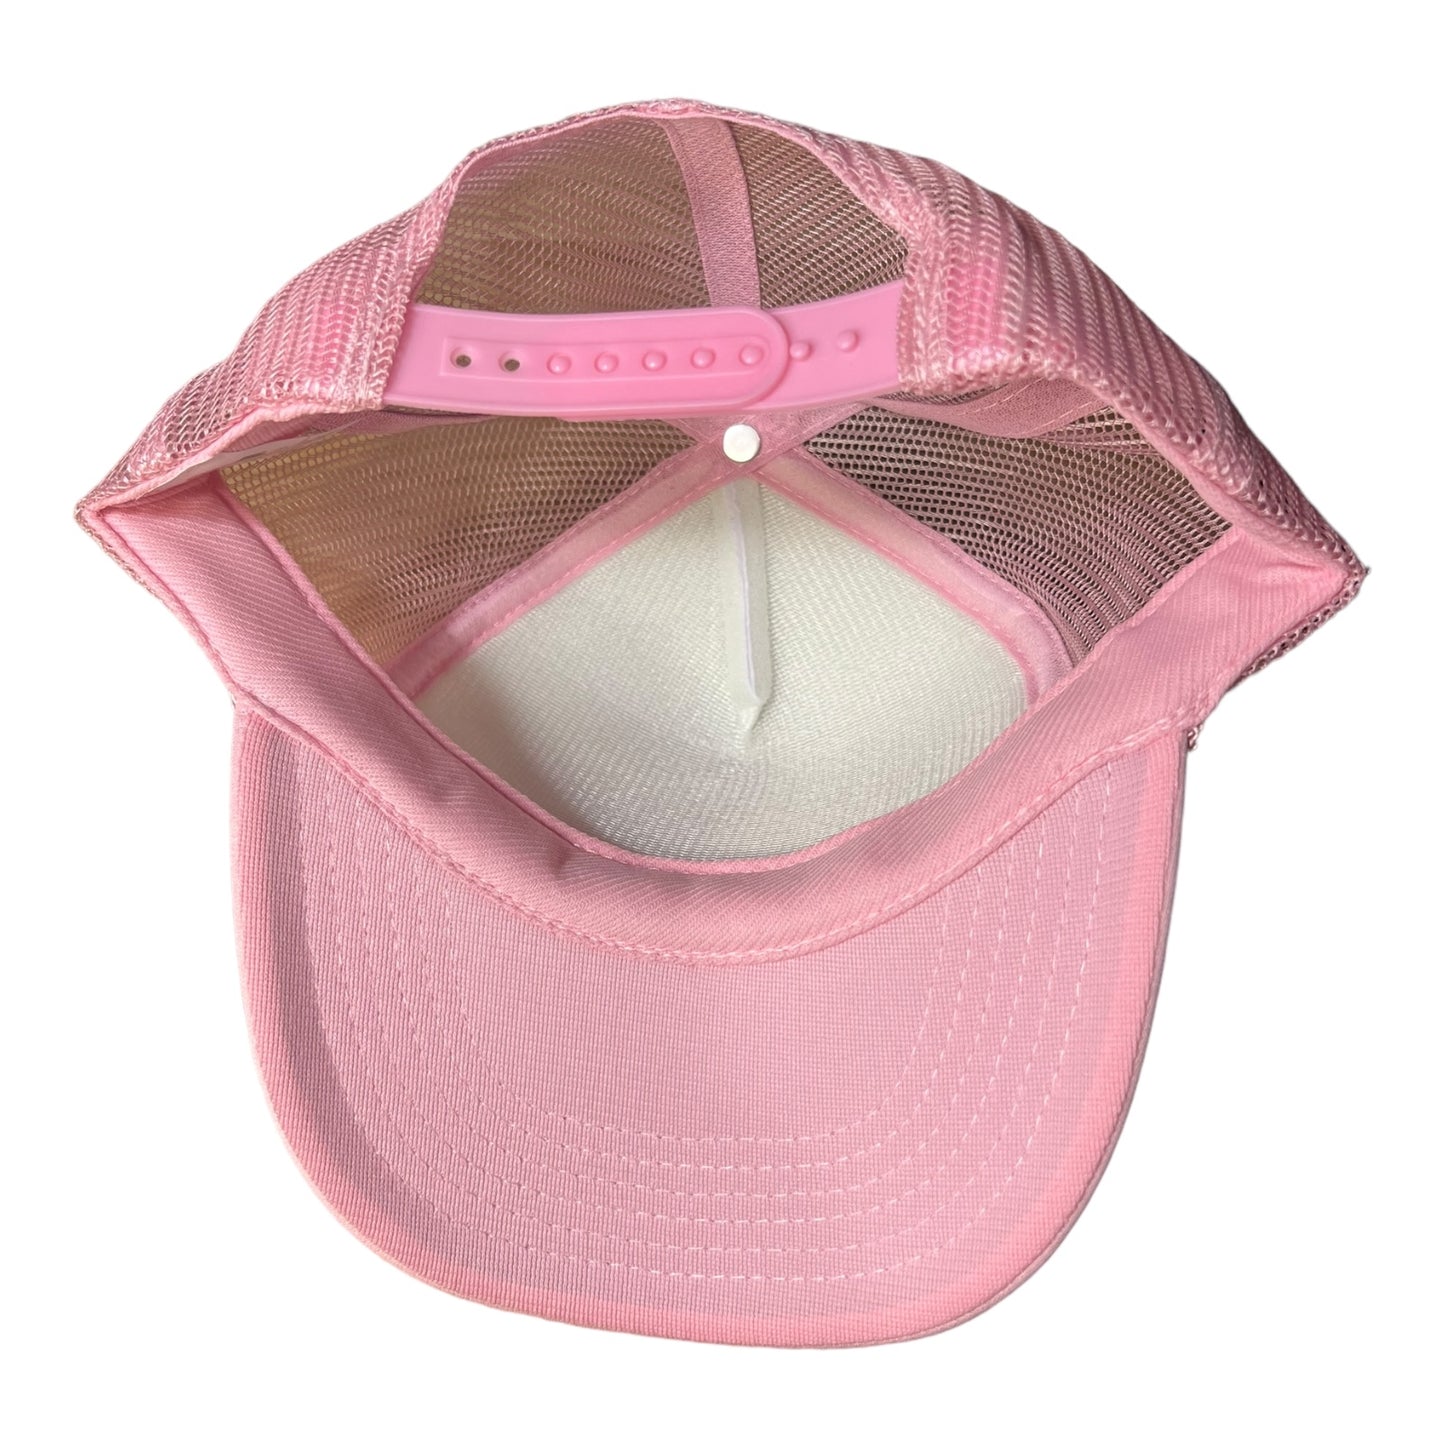 Blowjob Queen Trucker Hat Funny Trucker Hat Pink/White